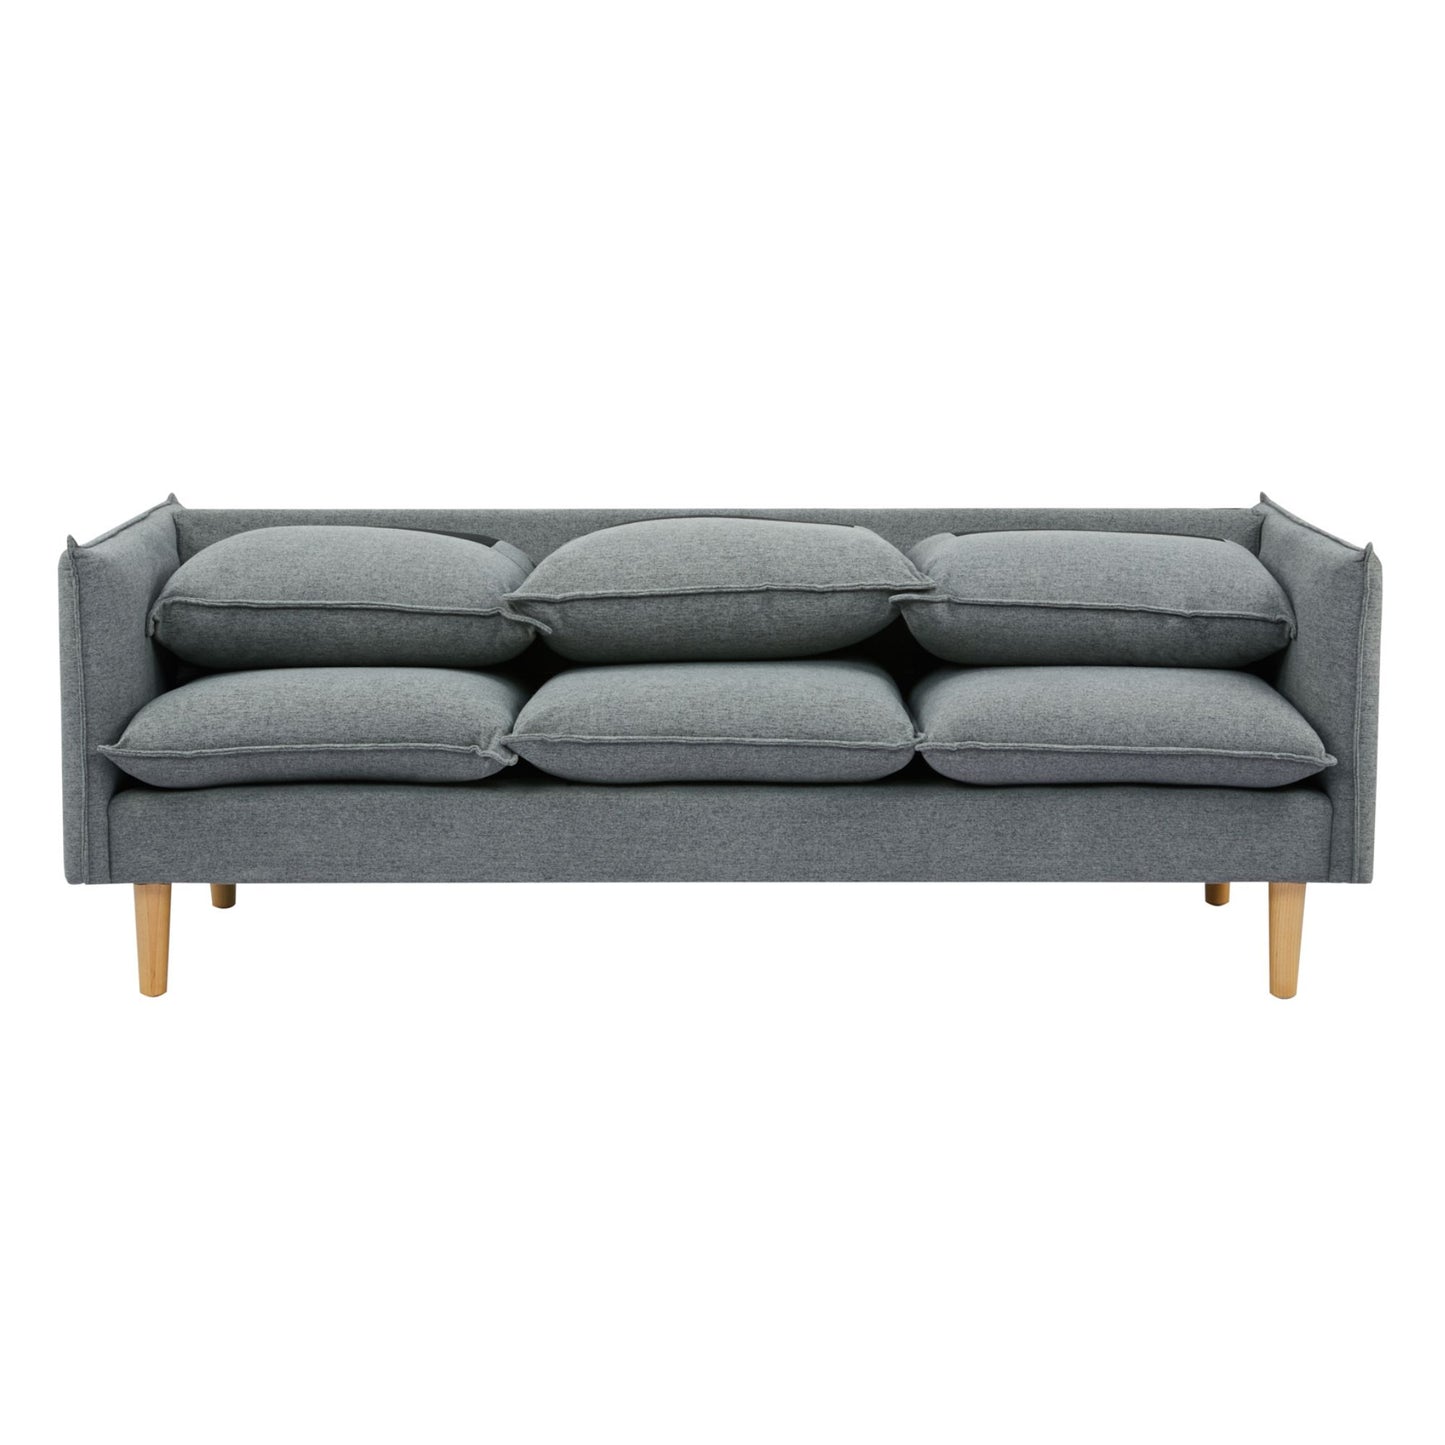 Sinatra 3 Seater Fabric Sofa Lounge Couch Dark Grey